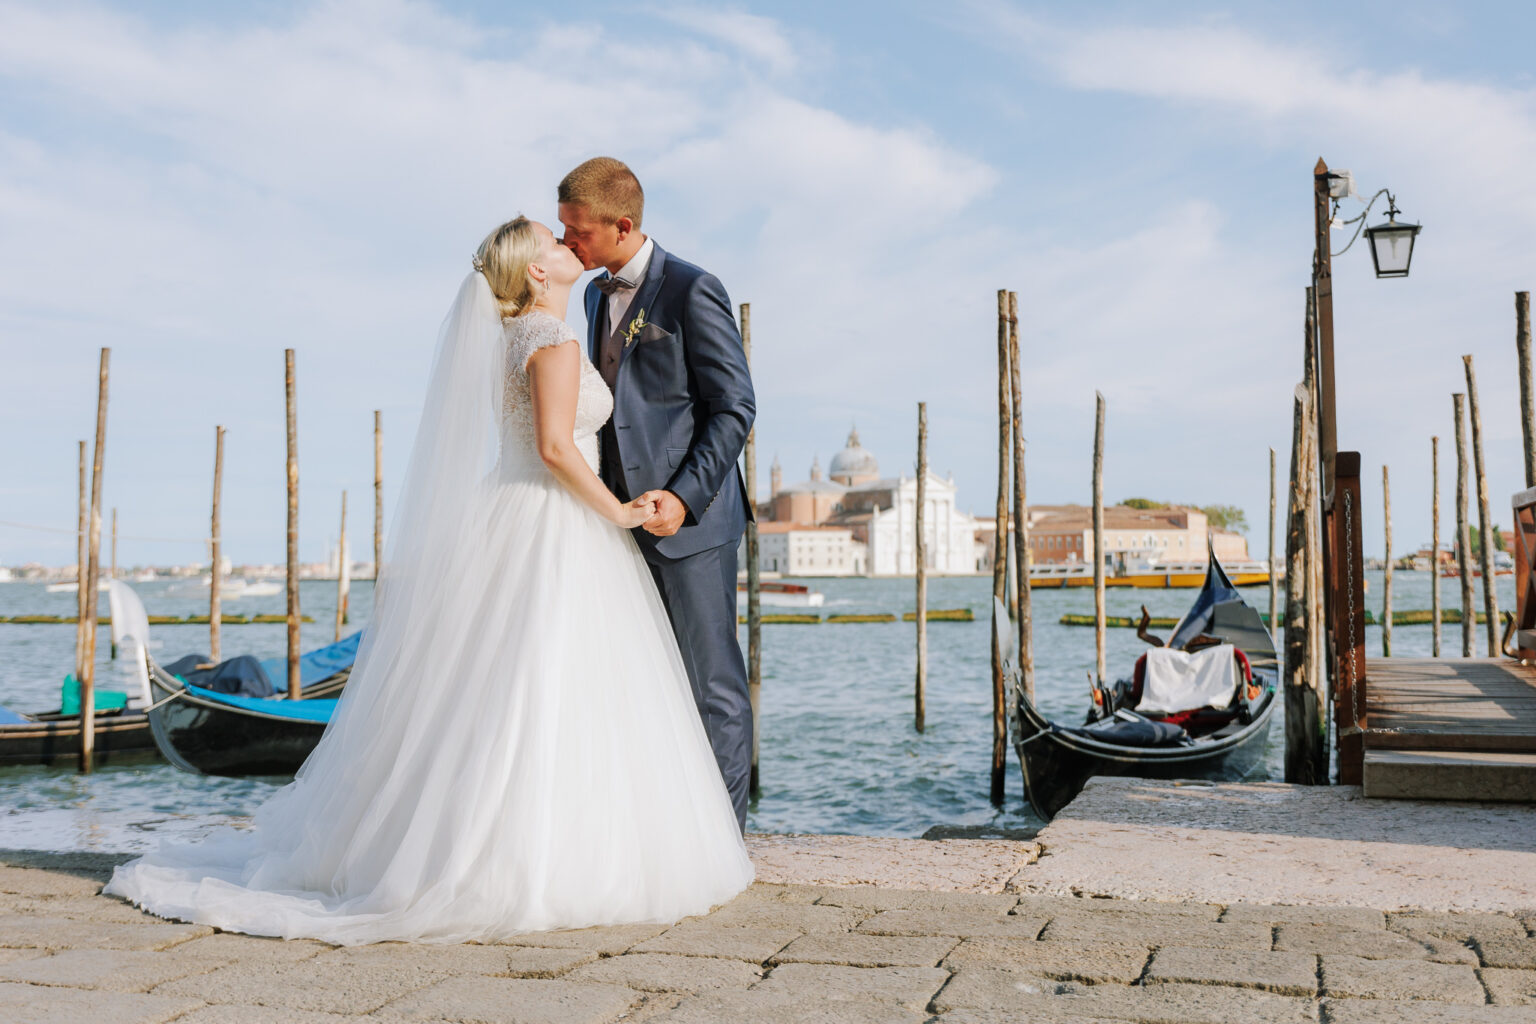 Wedding photographer Venice, Italy